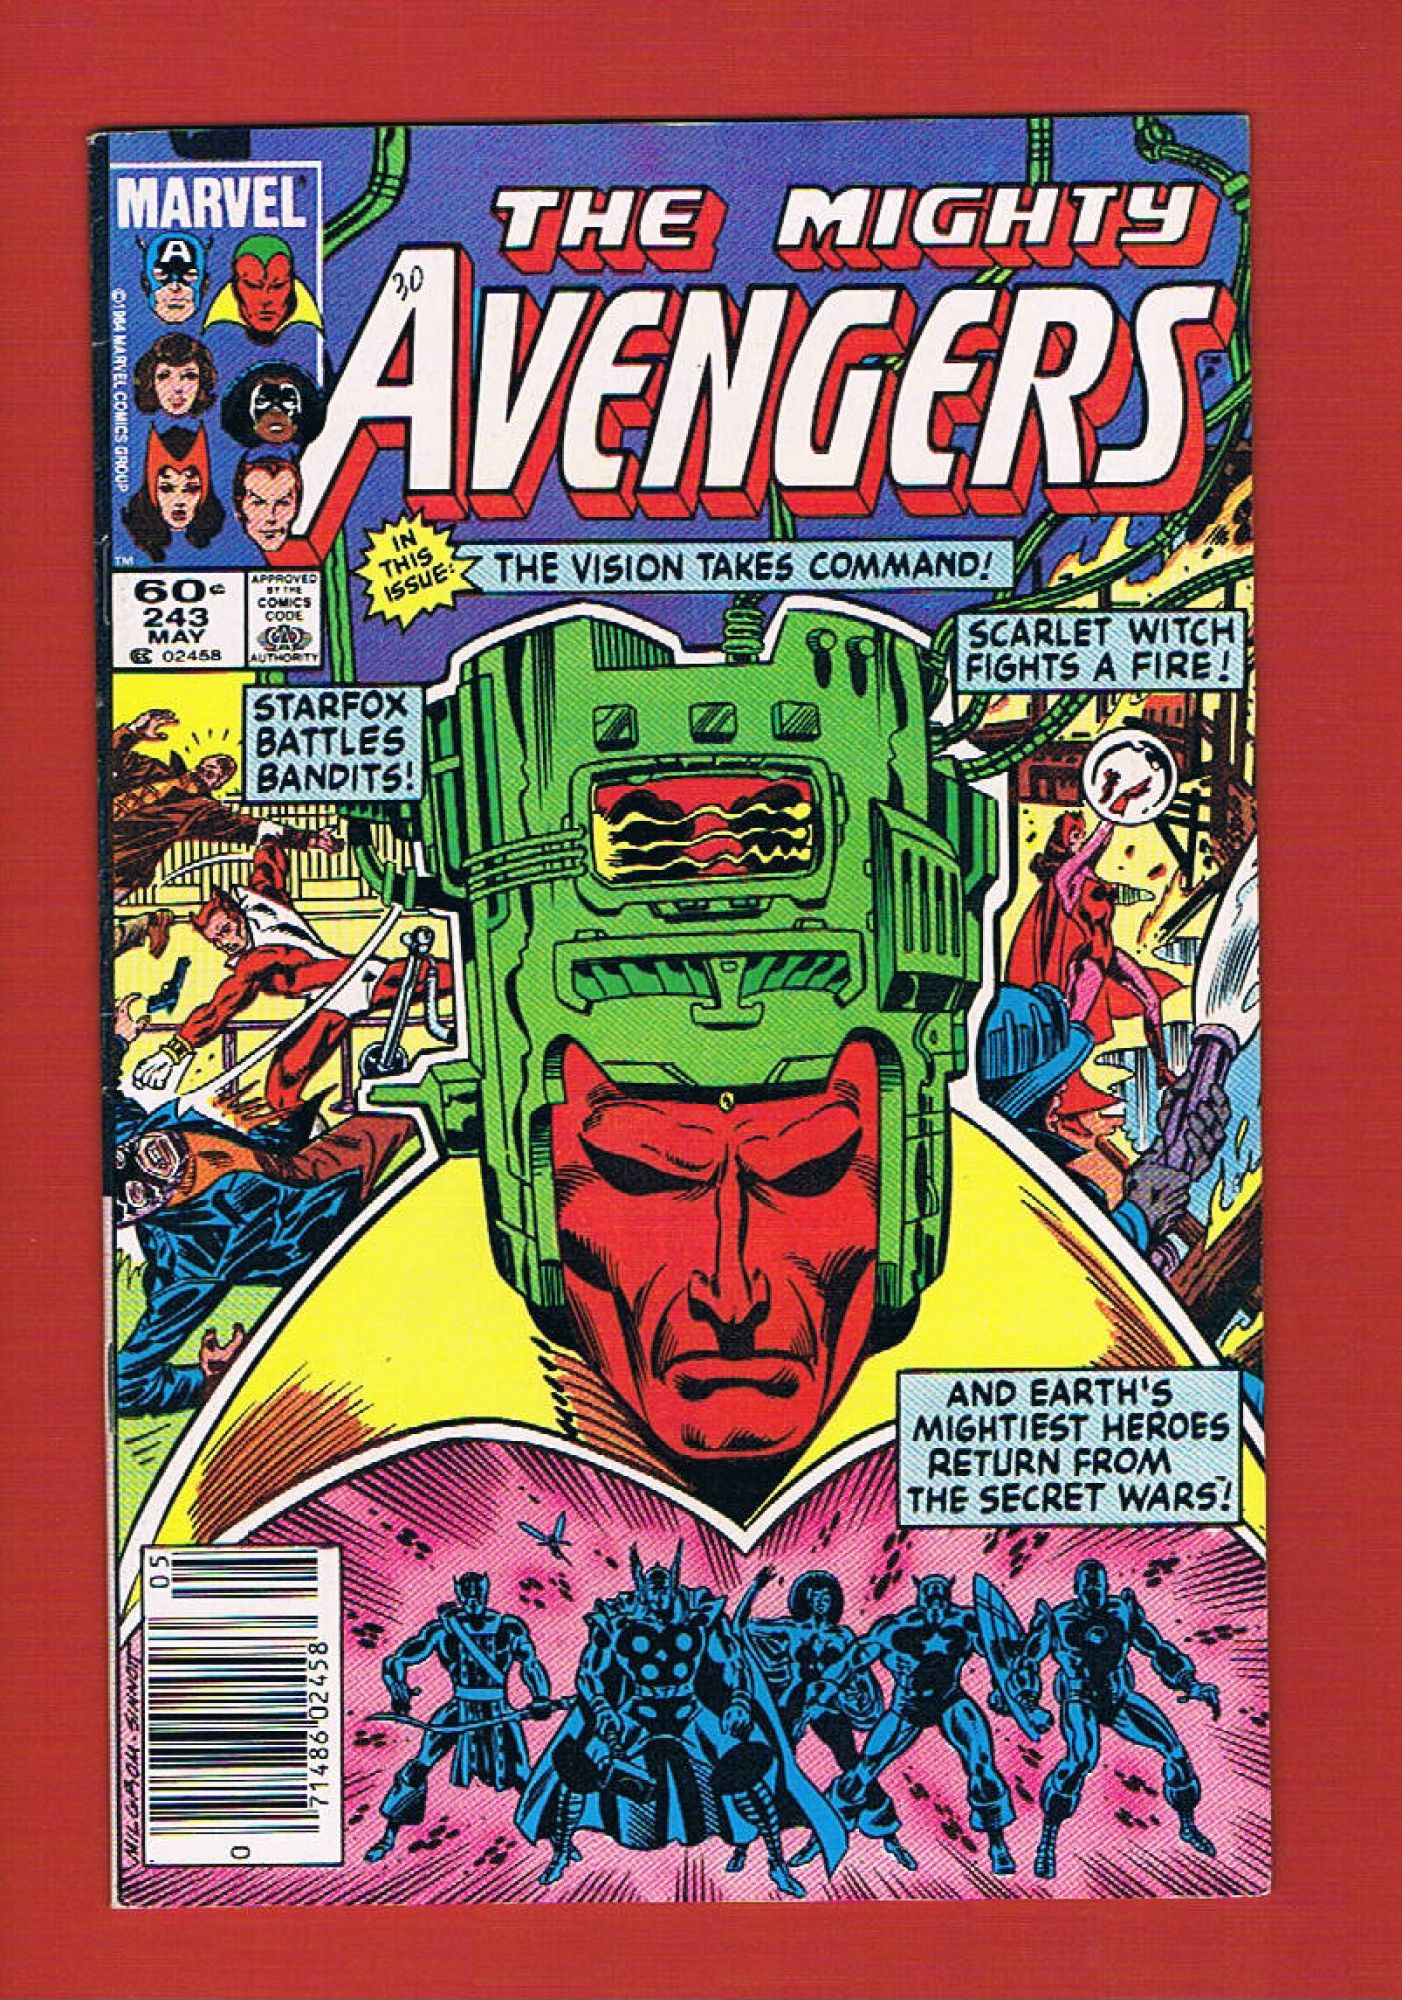 Avengers #243, May 1984, 8.5 VF+